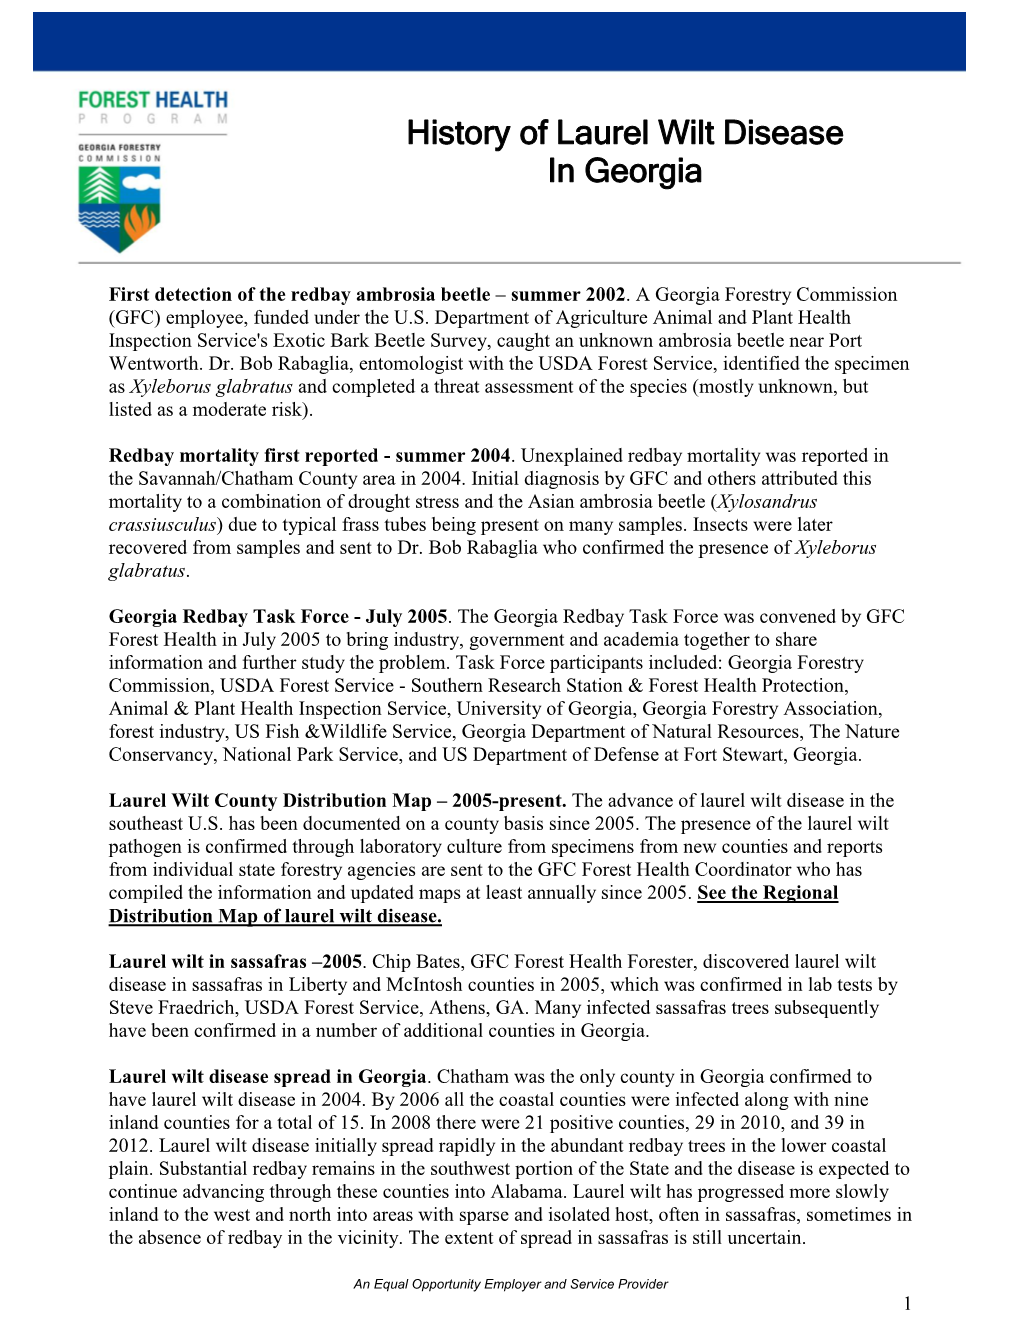 Laurel Wilt Disease History in Georgia